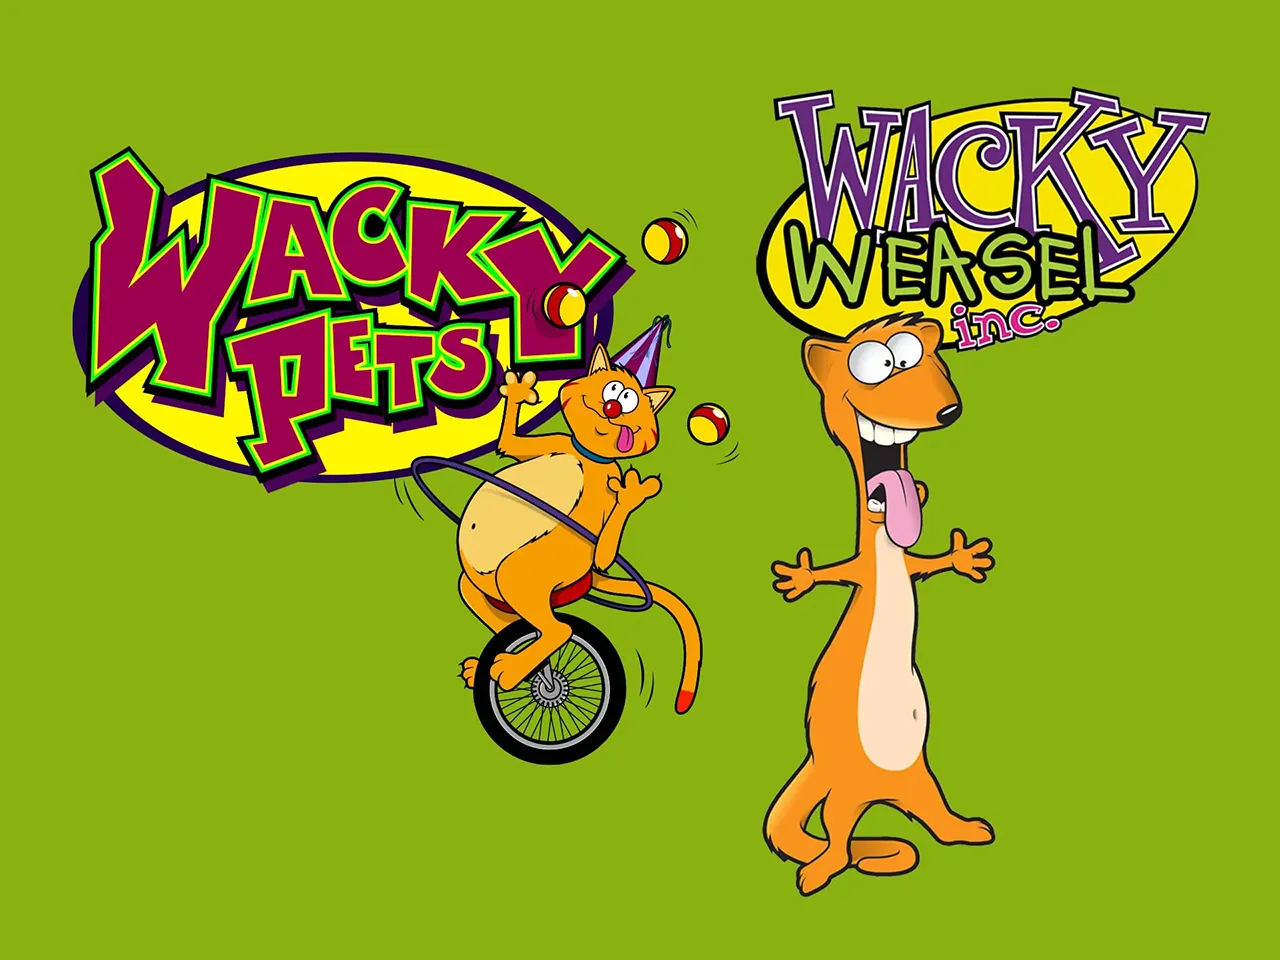 Wacky Pets cartoon illustration of cat juggling riding unicycle